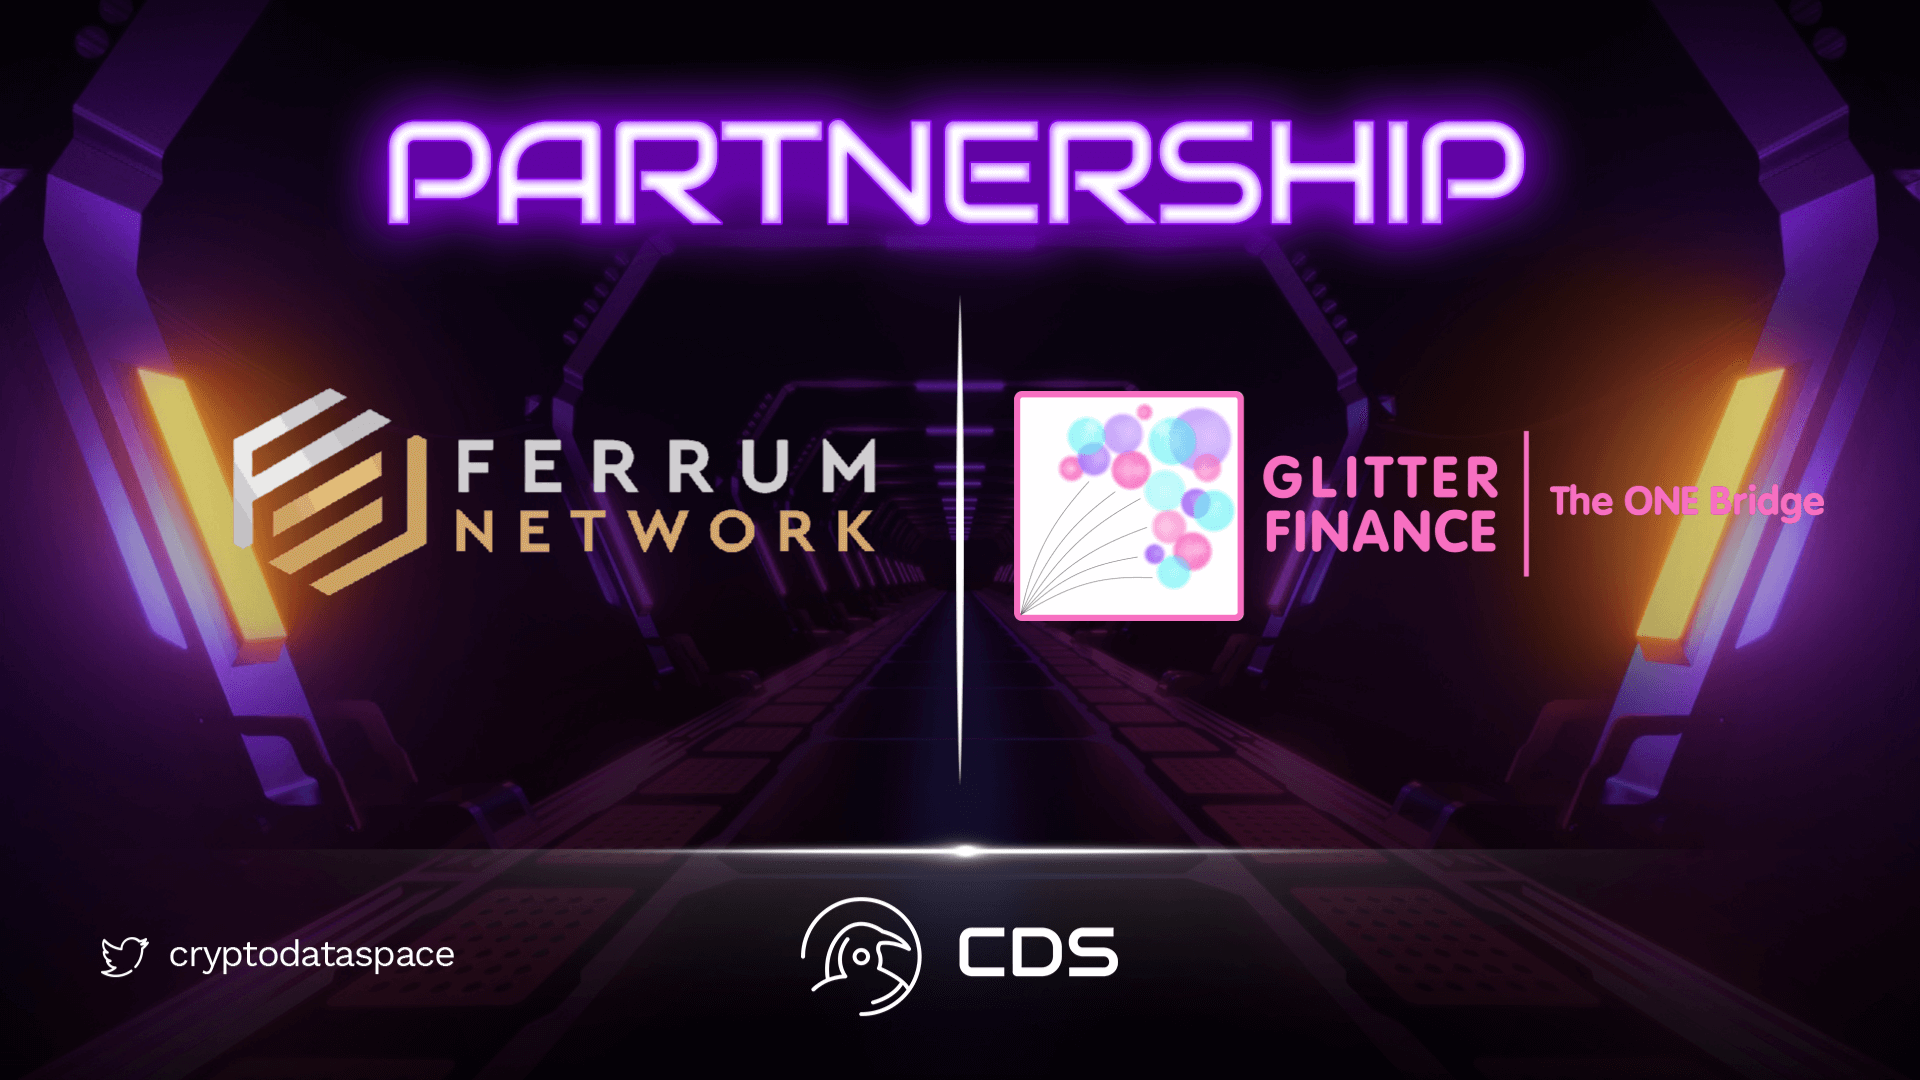 Ferrum Network x Glitter Finance Partnership